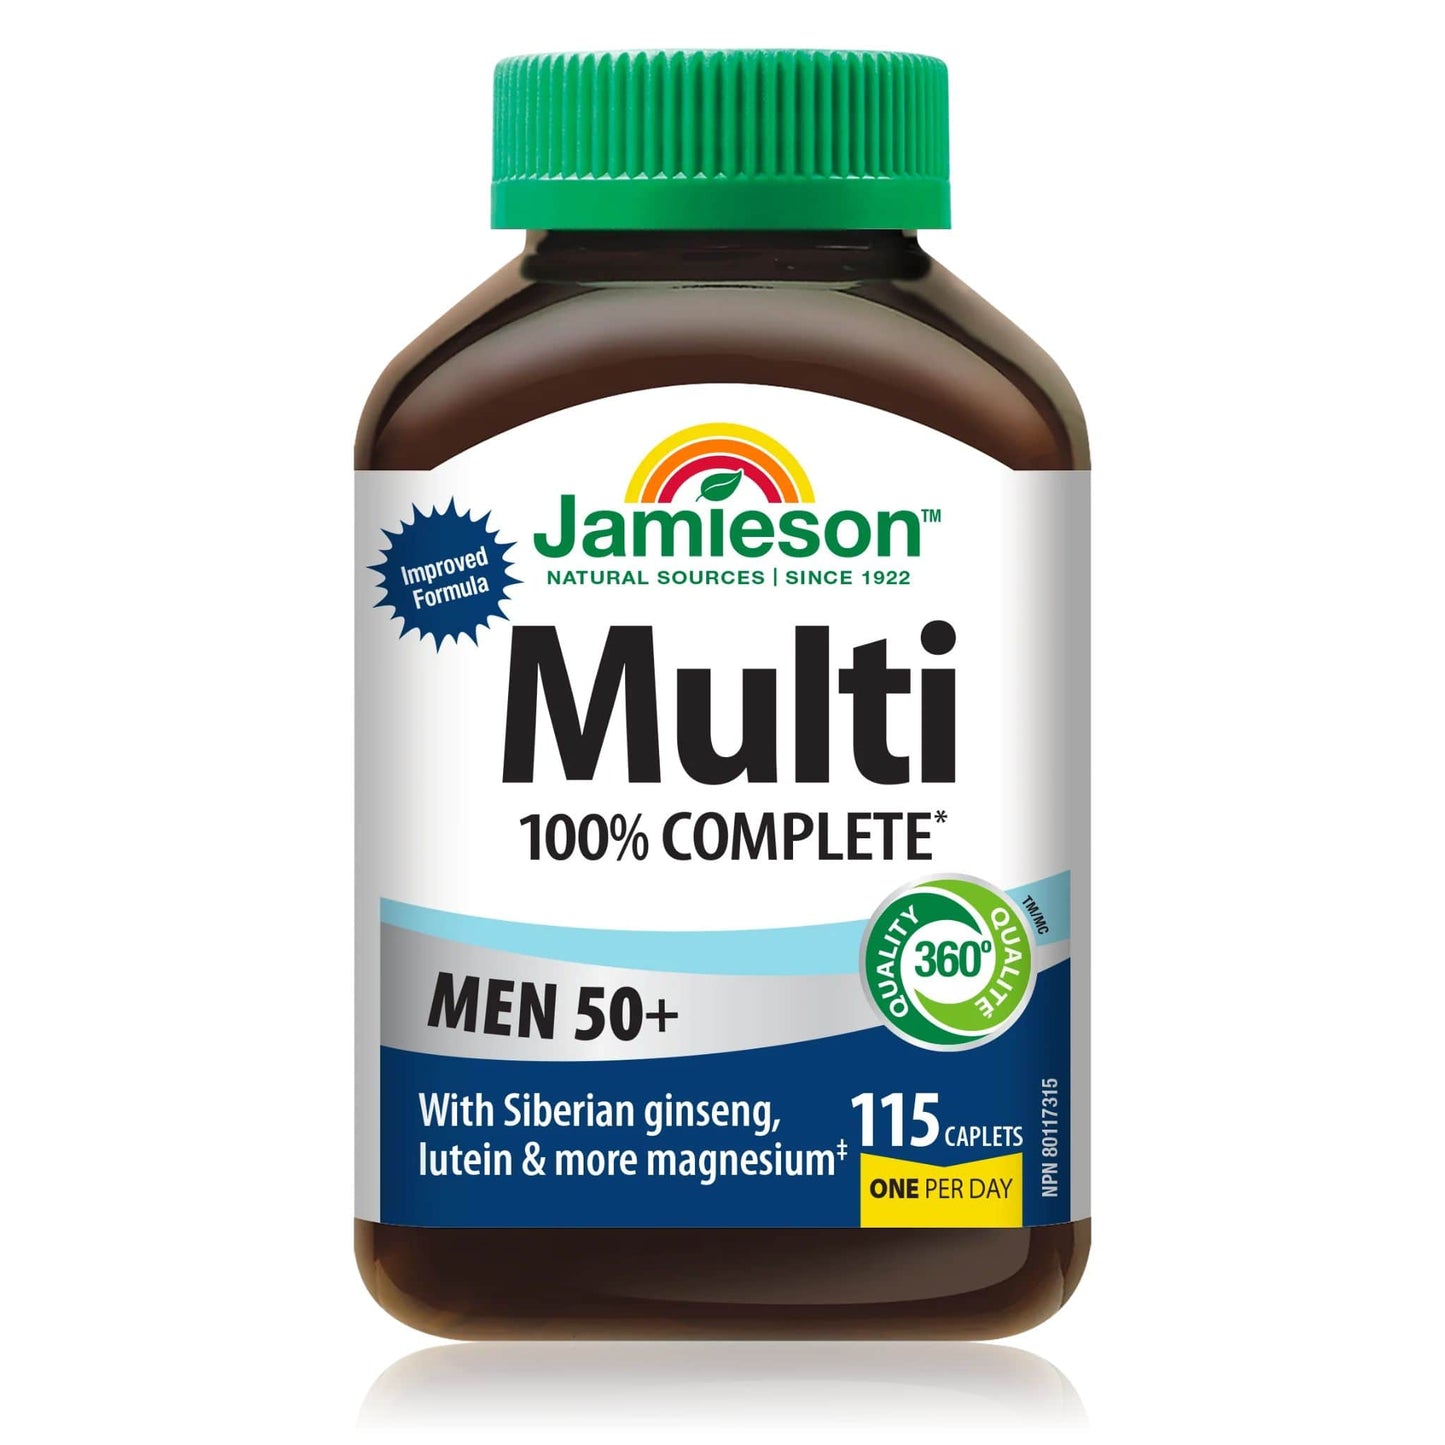 115 Caplets (New Formula) | Jamieson Multi 100% Complete Multivitamin for Men 50+